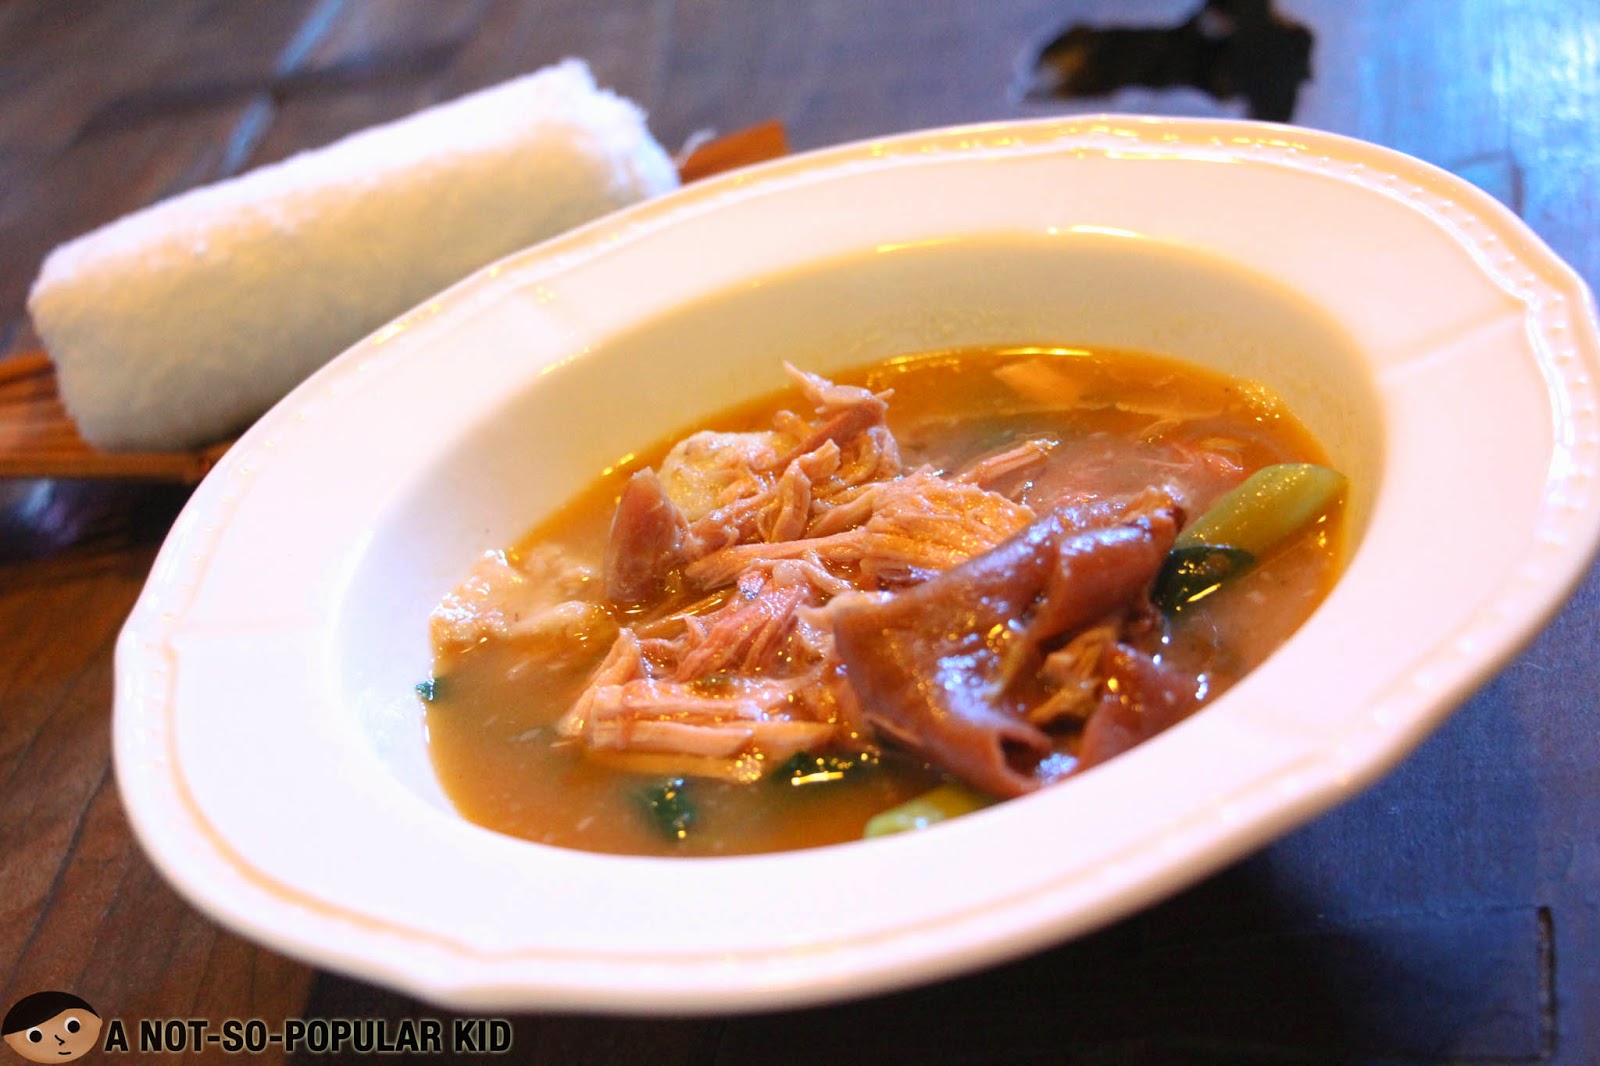 A Filipino classic dish with a twist - Sinigang na Lechon of Bale Dutung